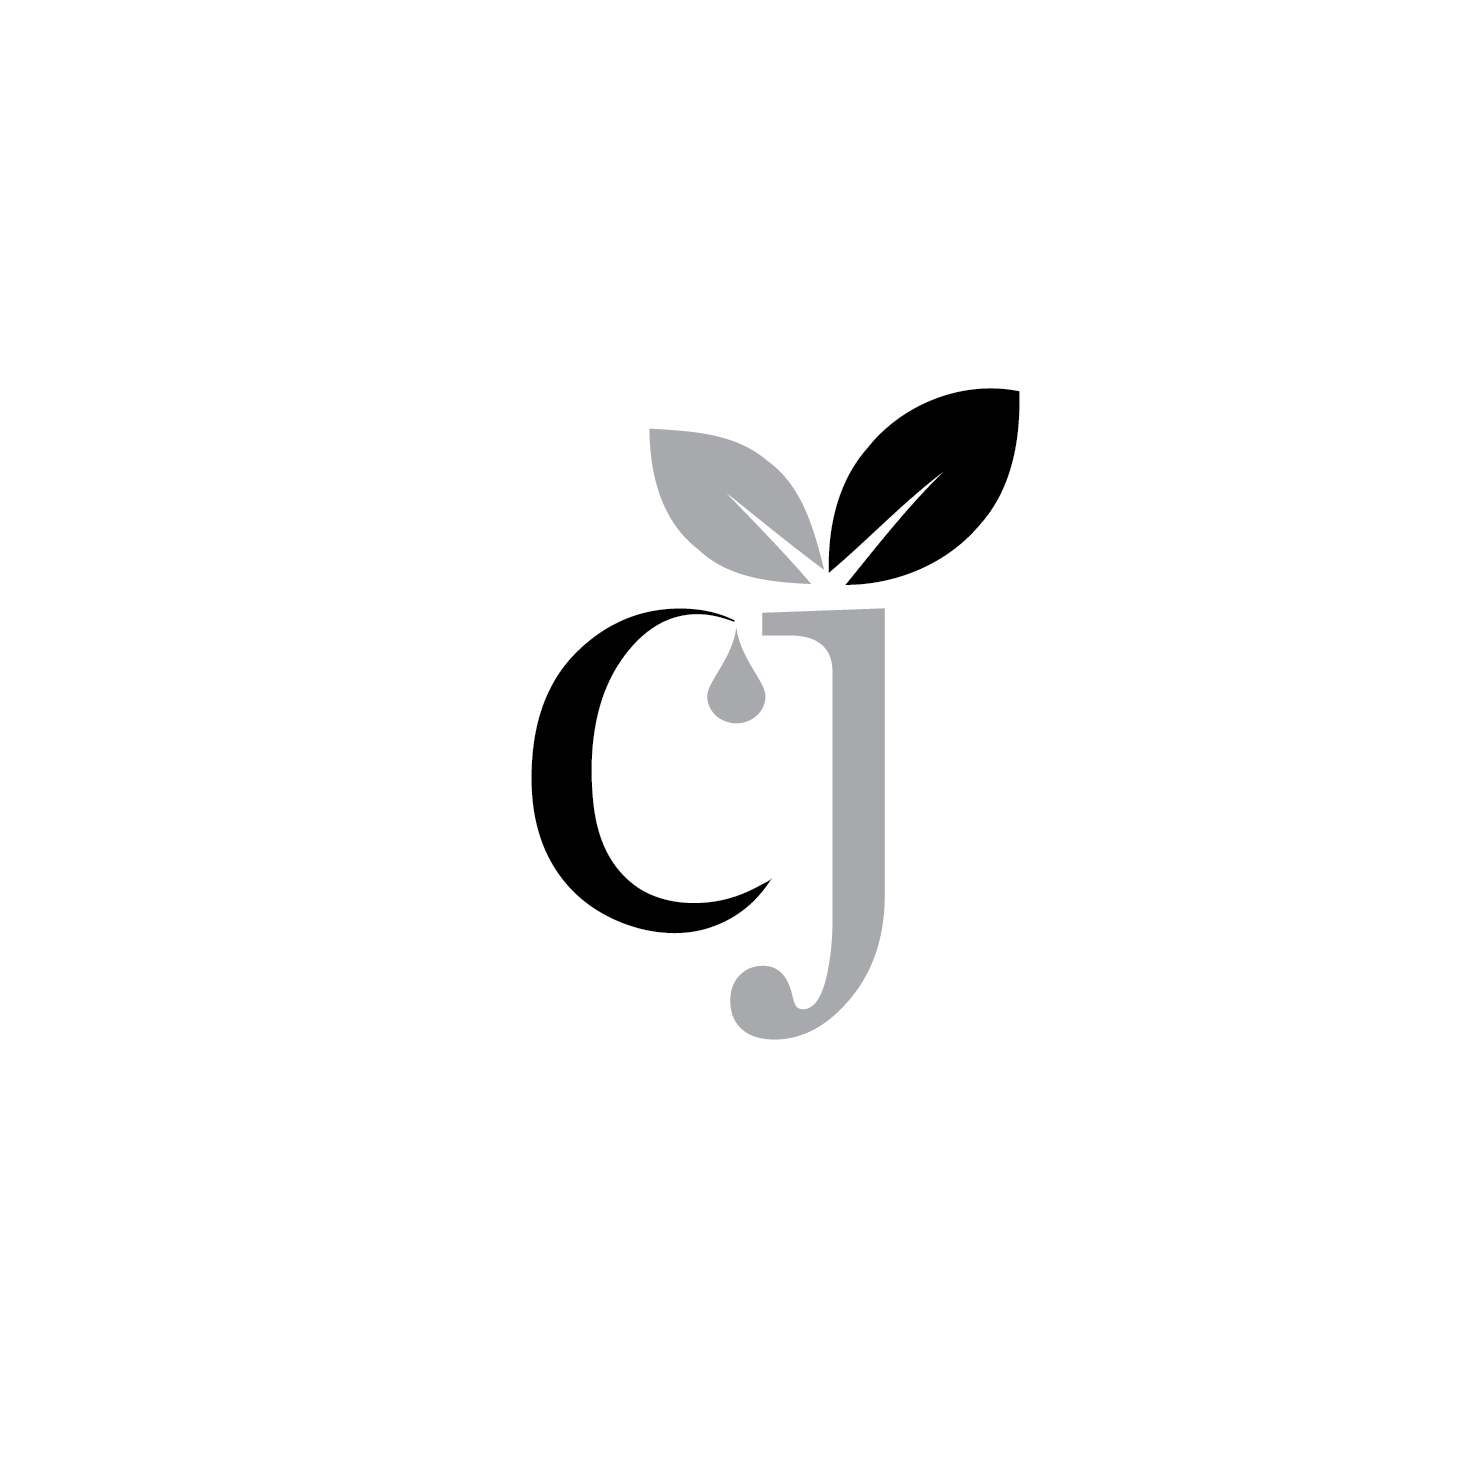 Logo Design for CJ Wellness. Silver & Black. by Pv_999.